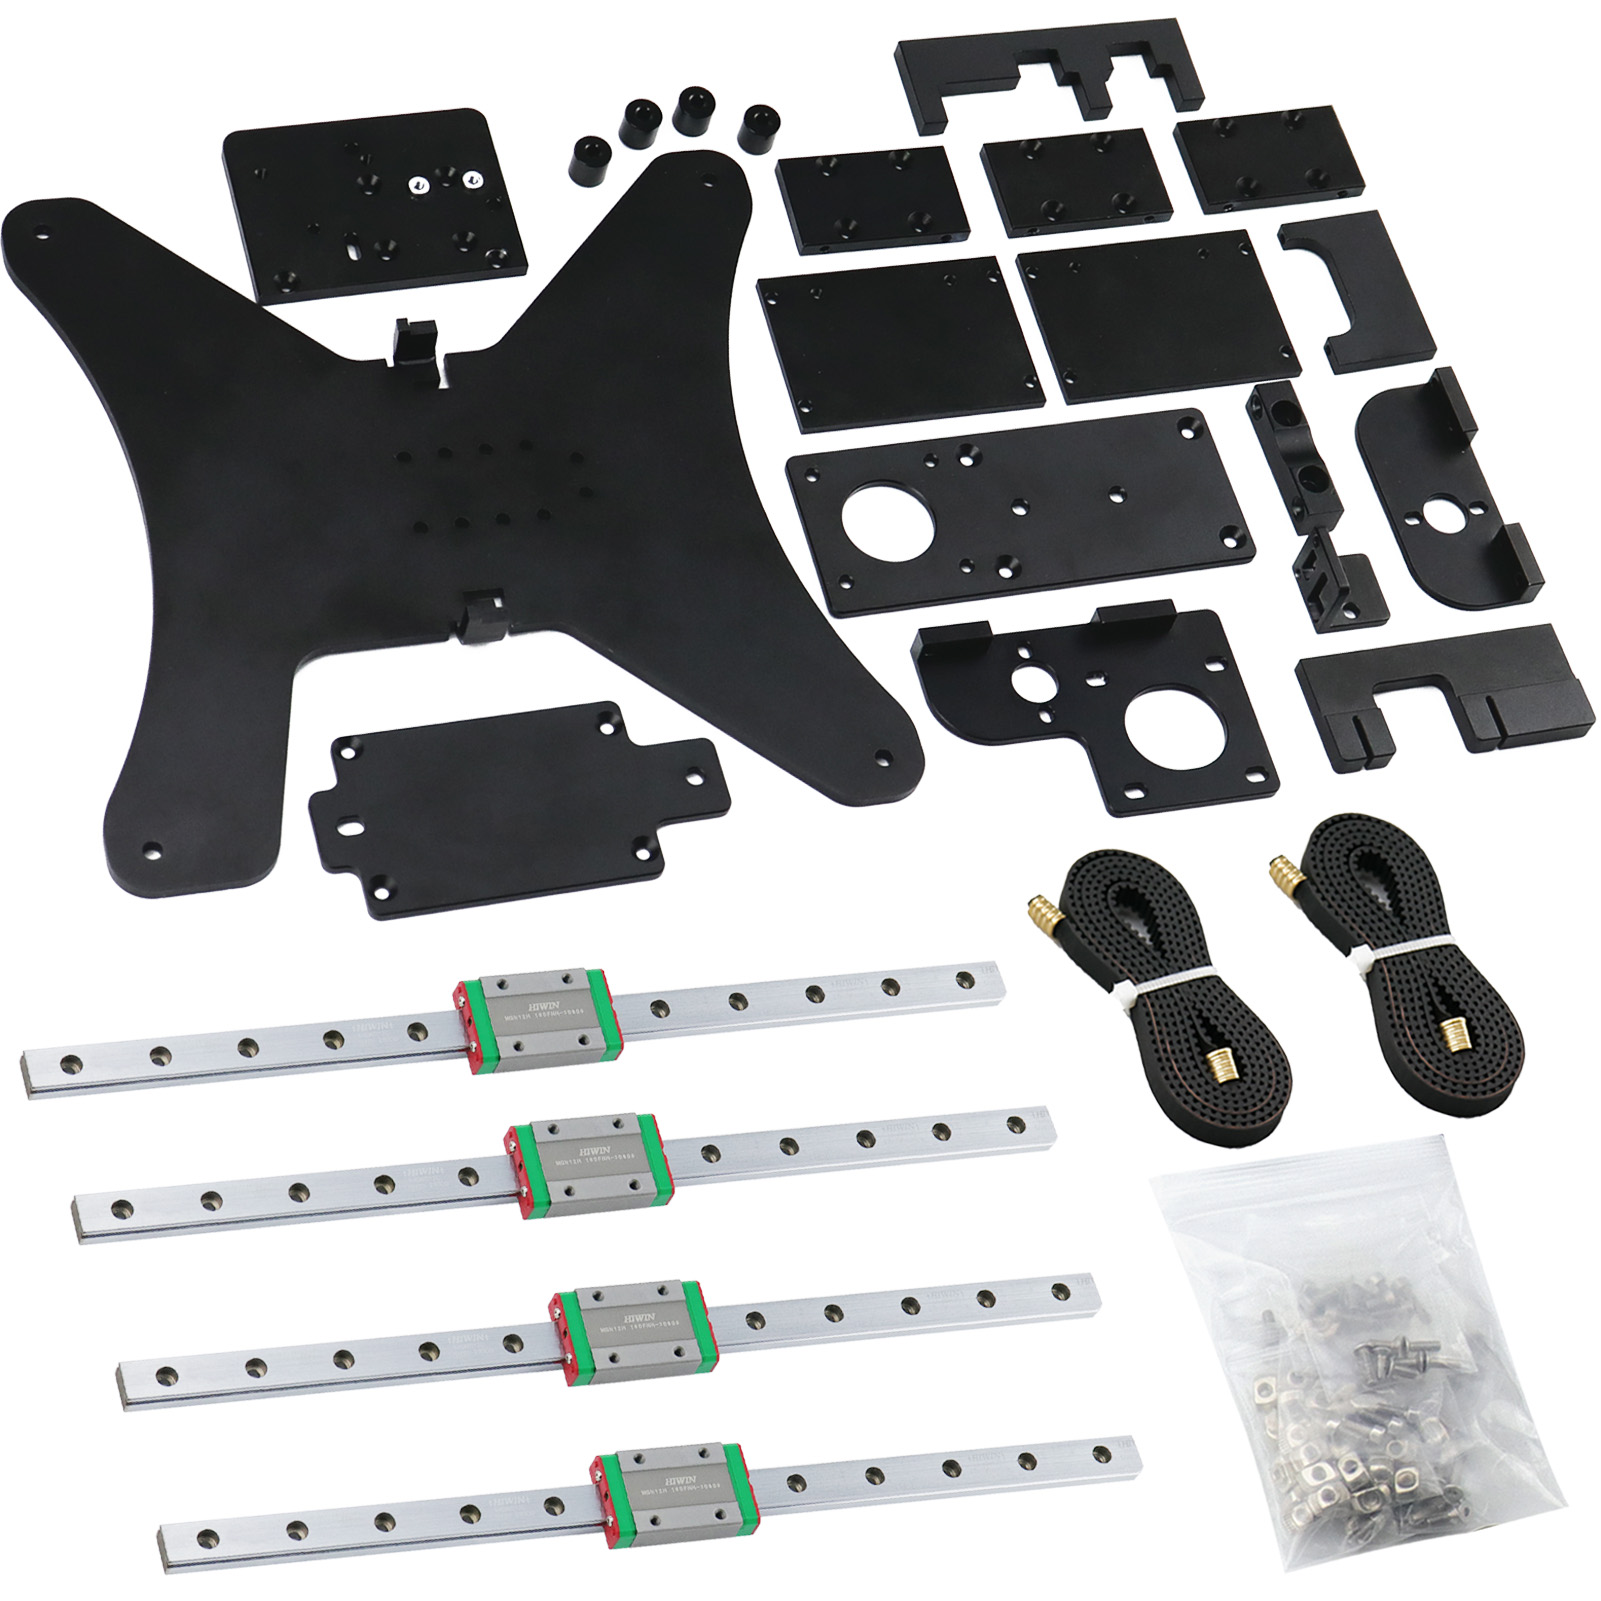 Ender 3 V2/Pro 3D Printer Upgrade Kit Black Knight kit and Belt Screws for Genuine Hiwin Linear Rail Improvement 1